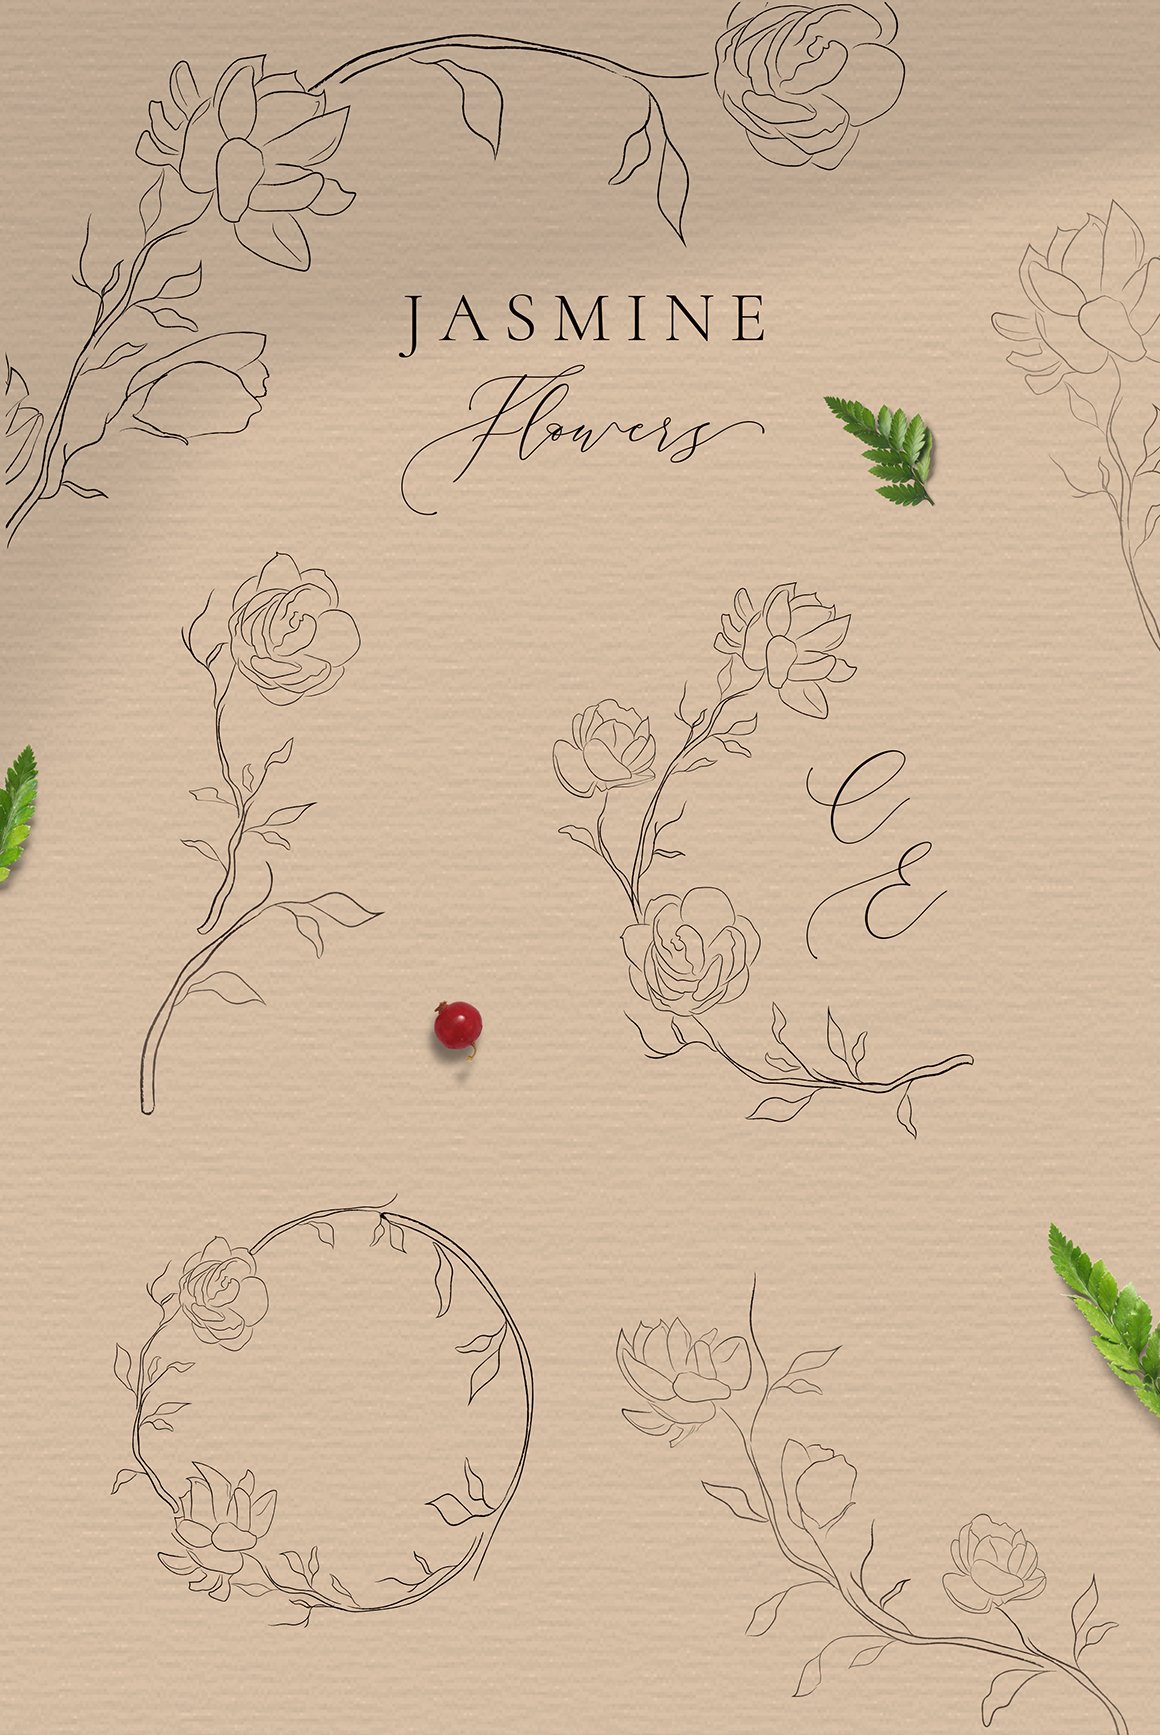 Jasmine Flowers Line Art Decorative Elements